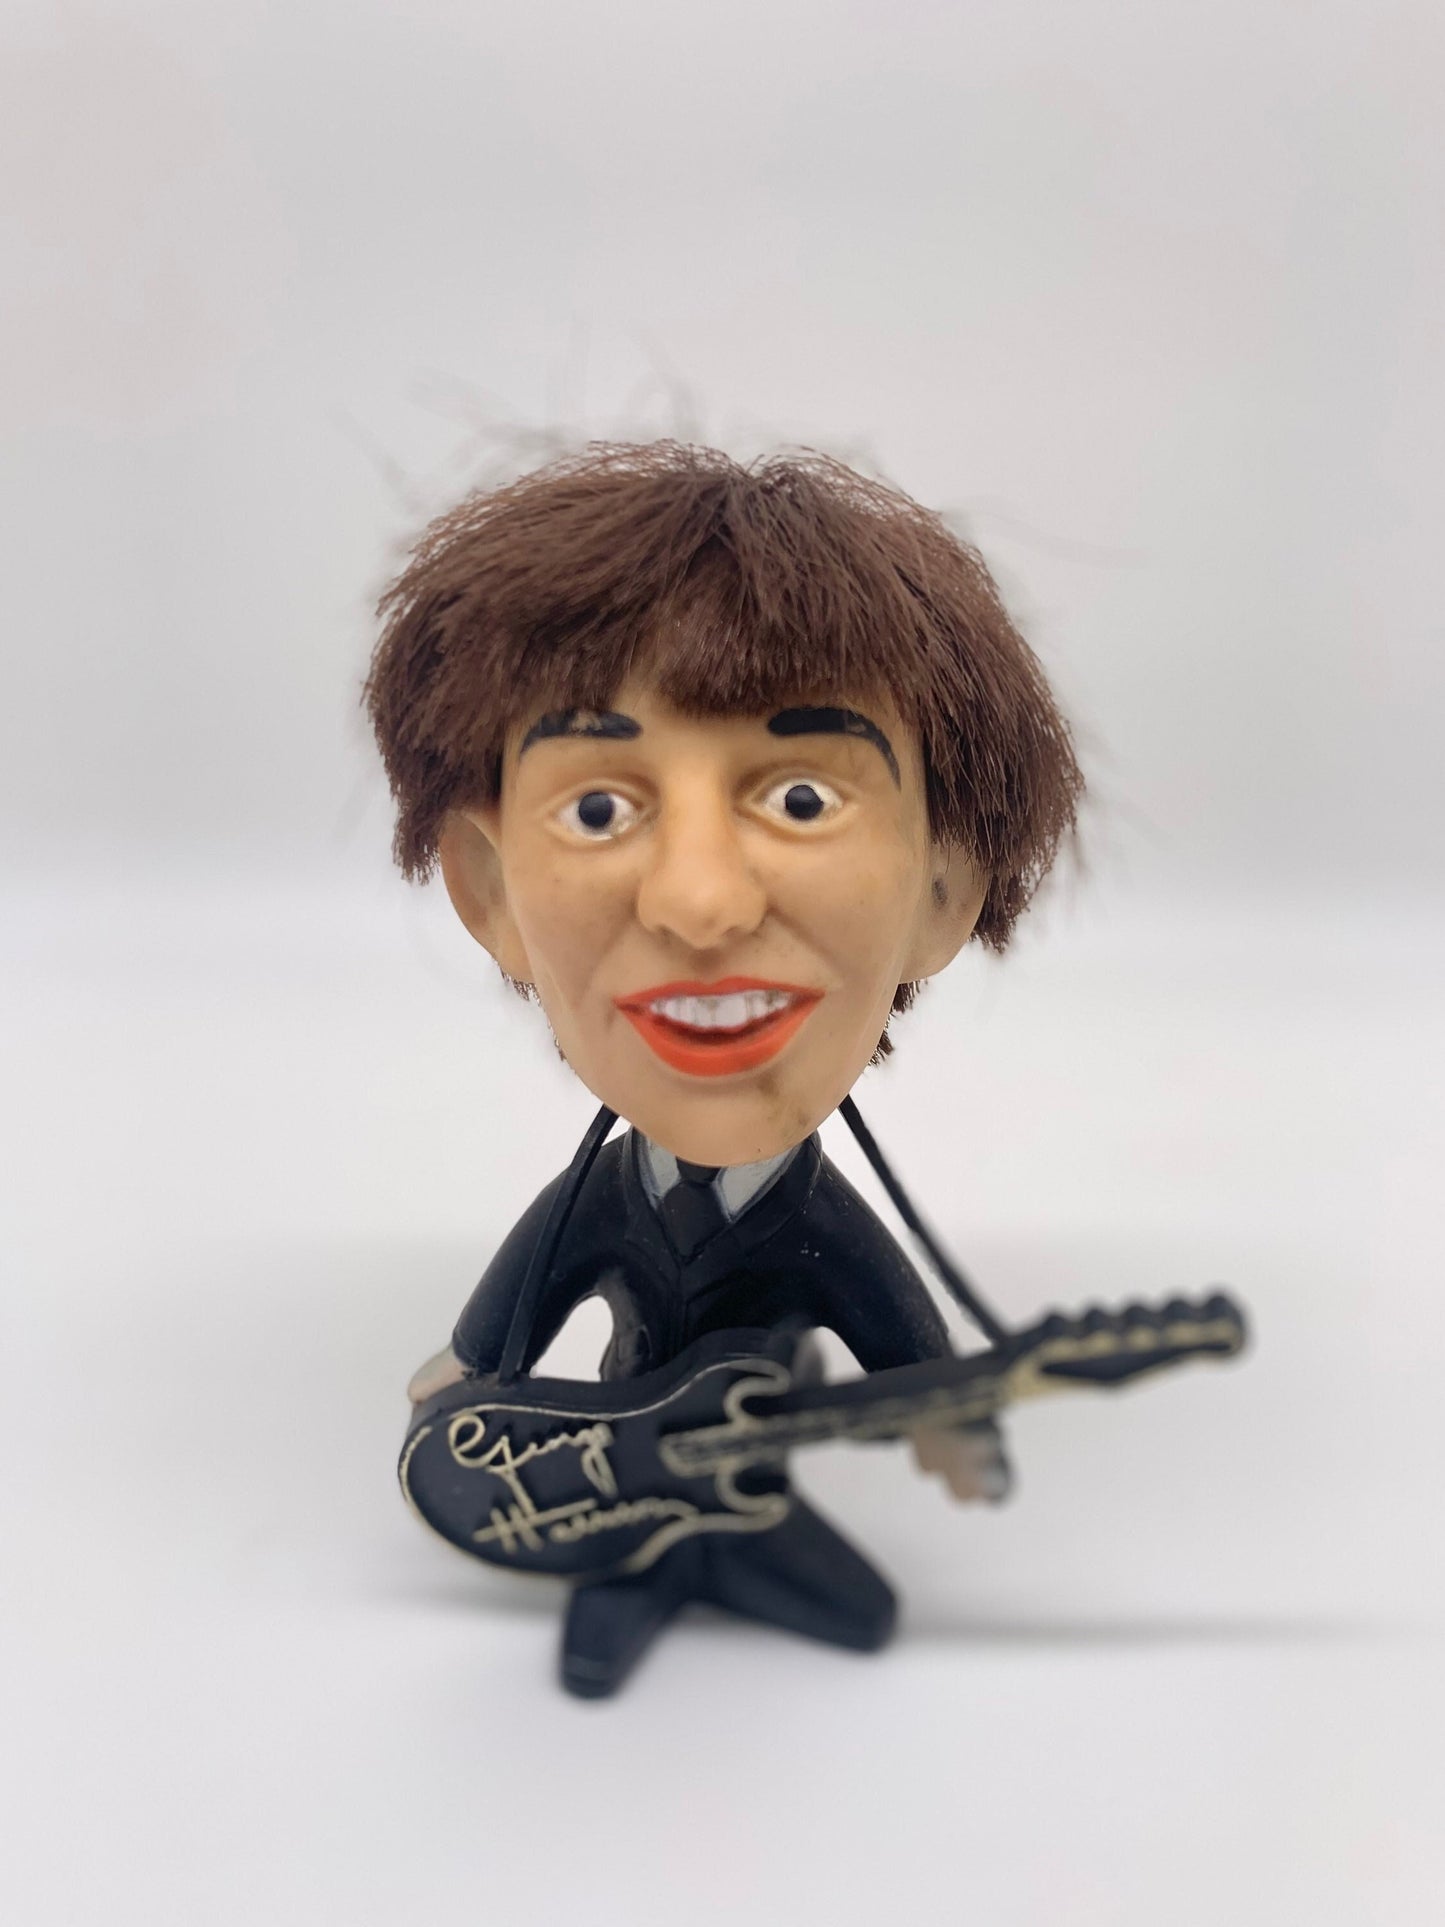 George Harrison The Beatles SELTAEB NEMS Figurine Collectable Vintage Memorabilia Perfect Birthday Gift Beatles Band Merch